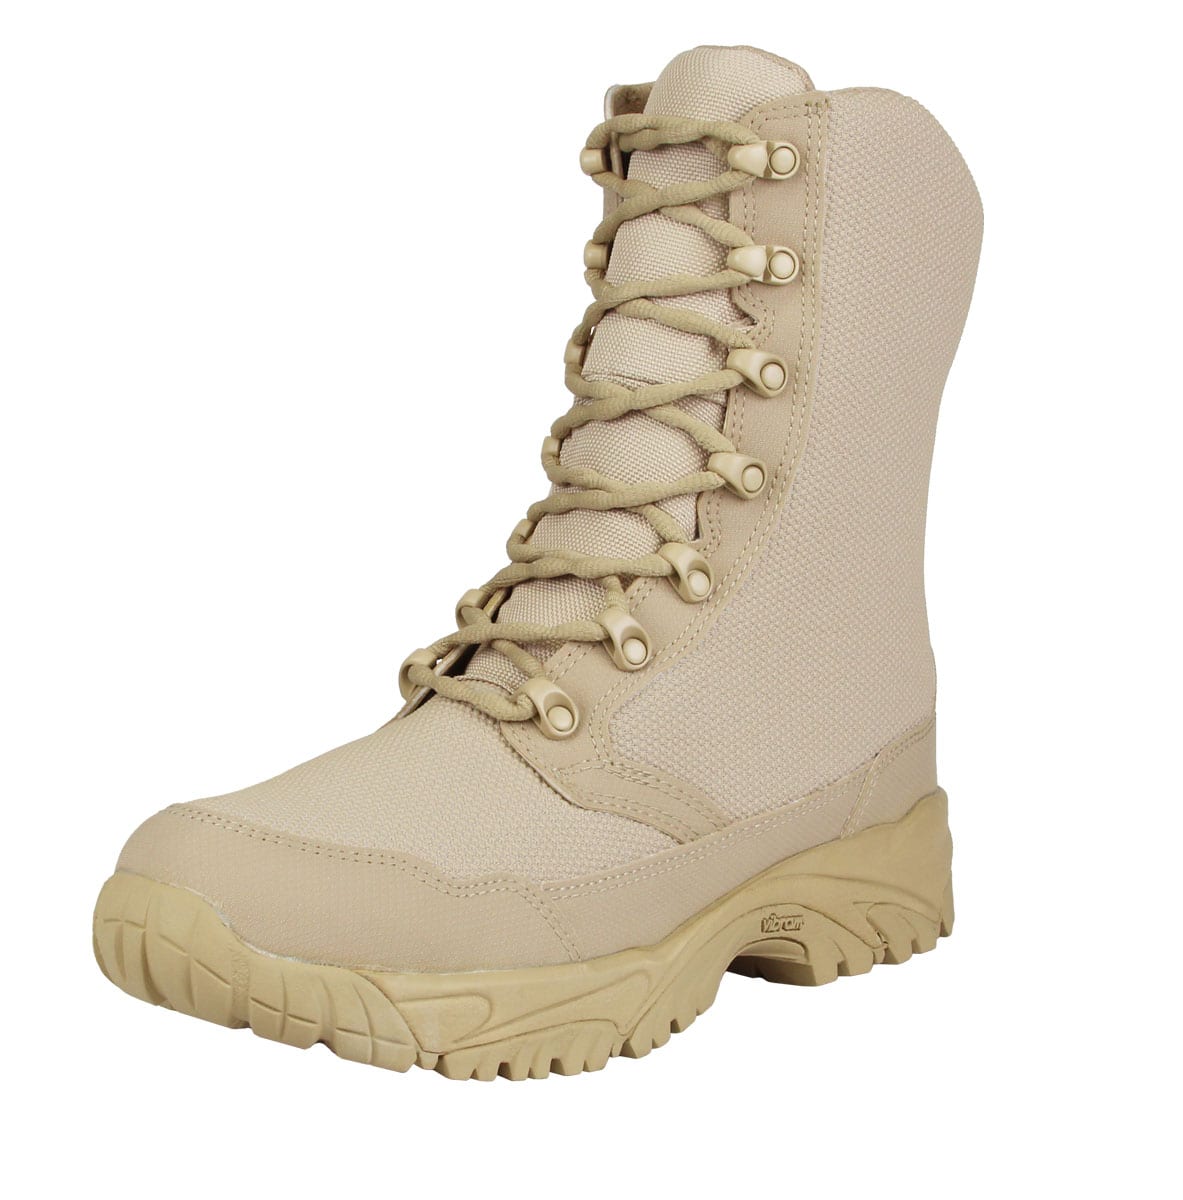 military grade steel toe boots